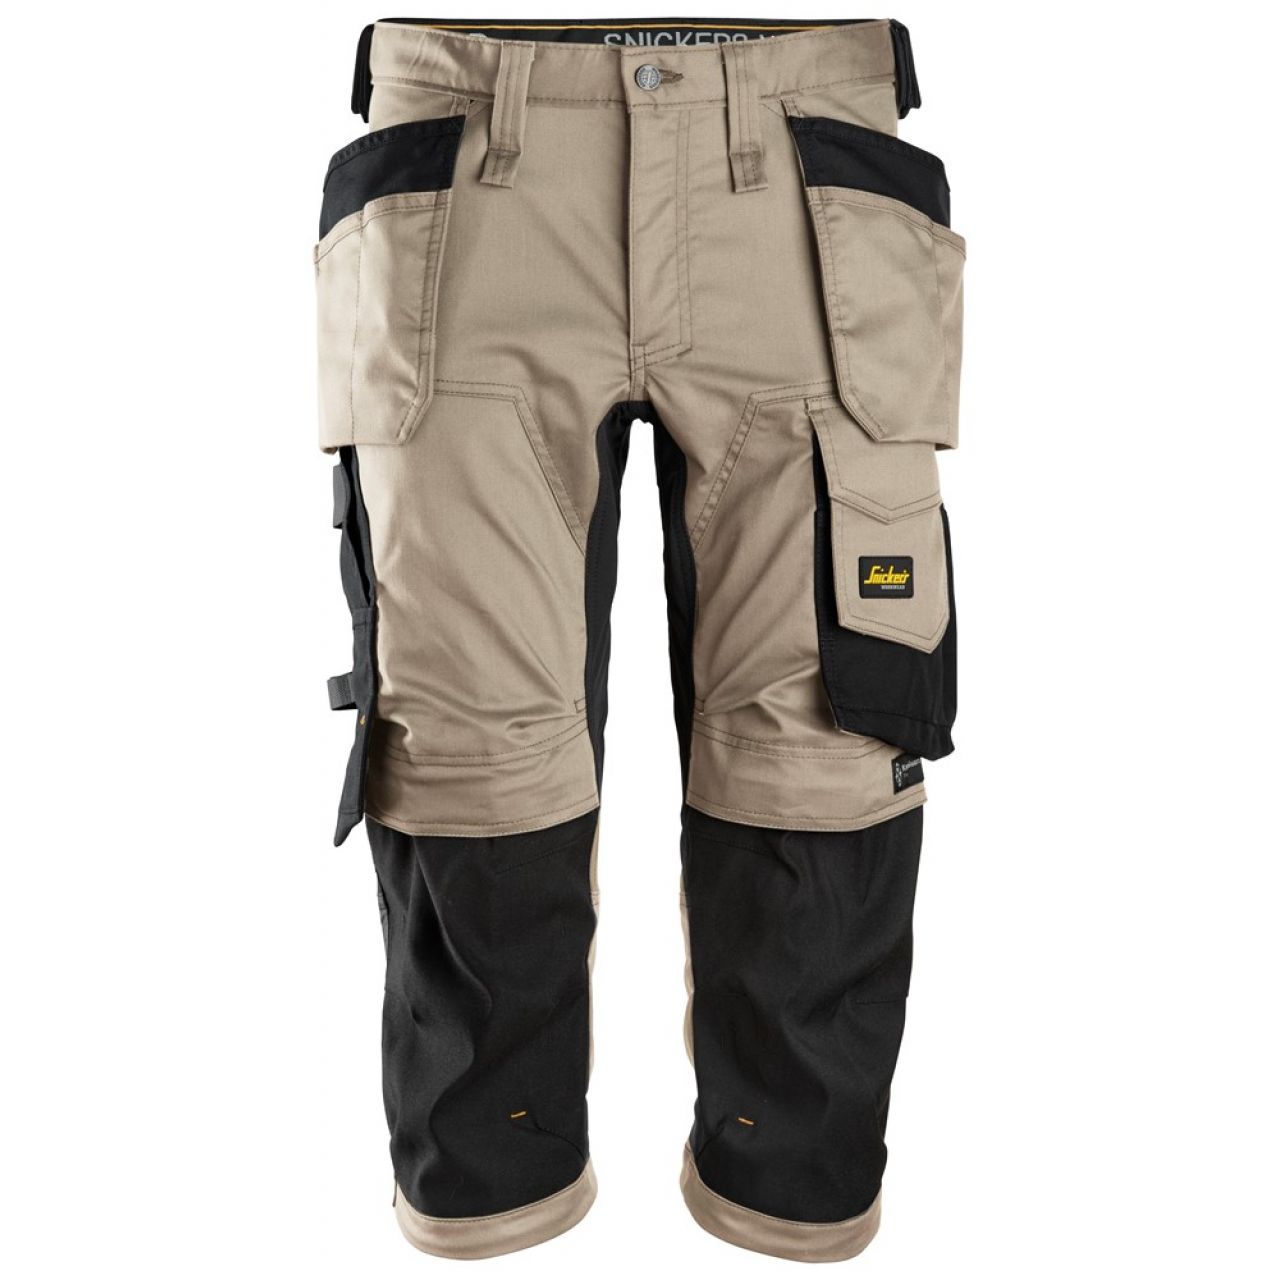 6142 Pantalones pirata de trabajo elasticos con bolsillos flotantes AllroundWork beige-negro talla 64